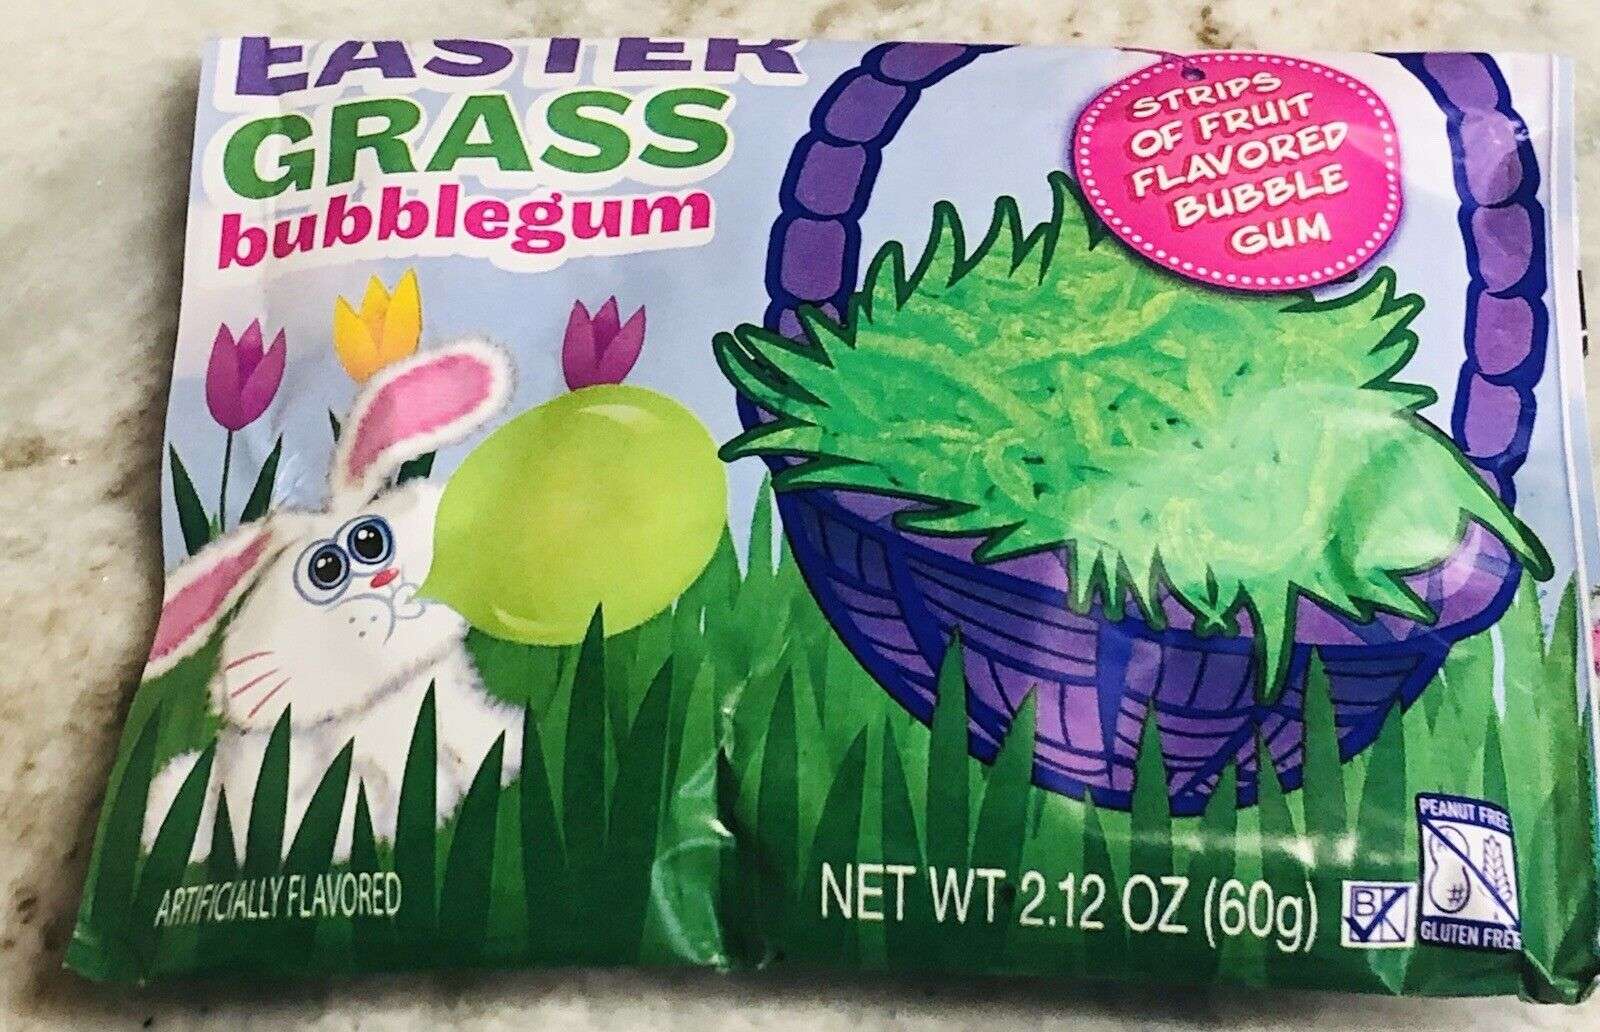 Easter Grass Bubble Gum